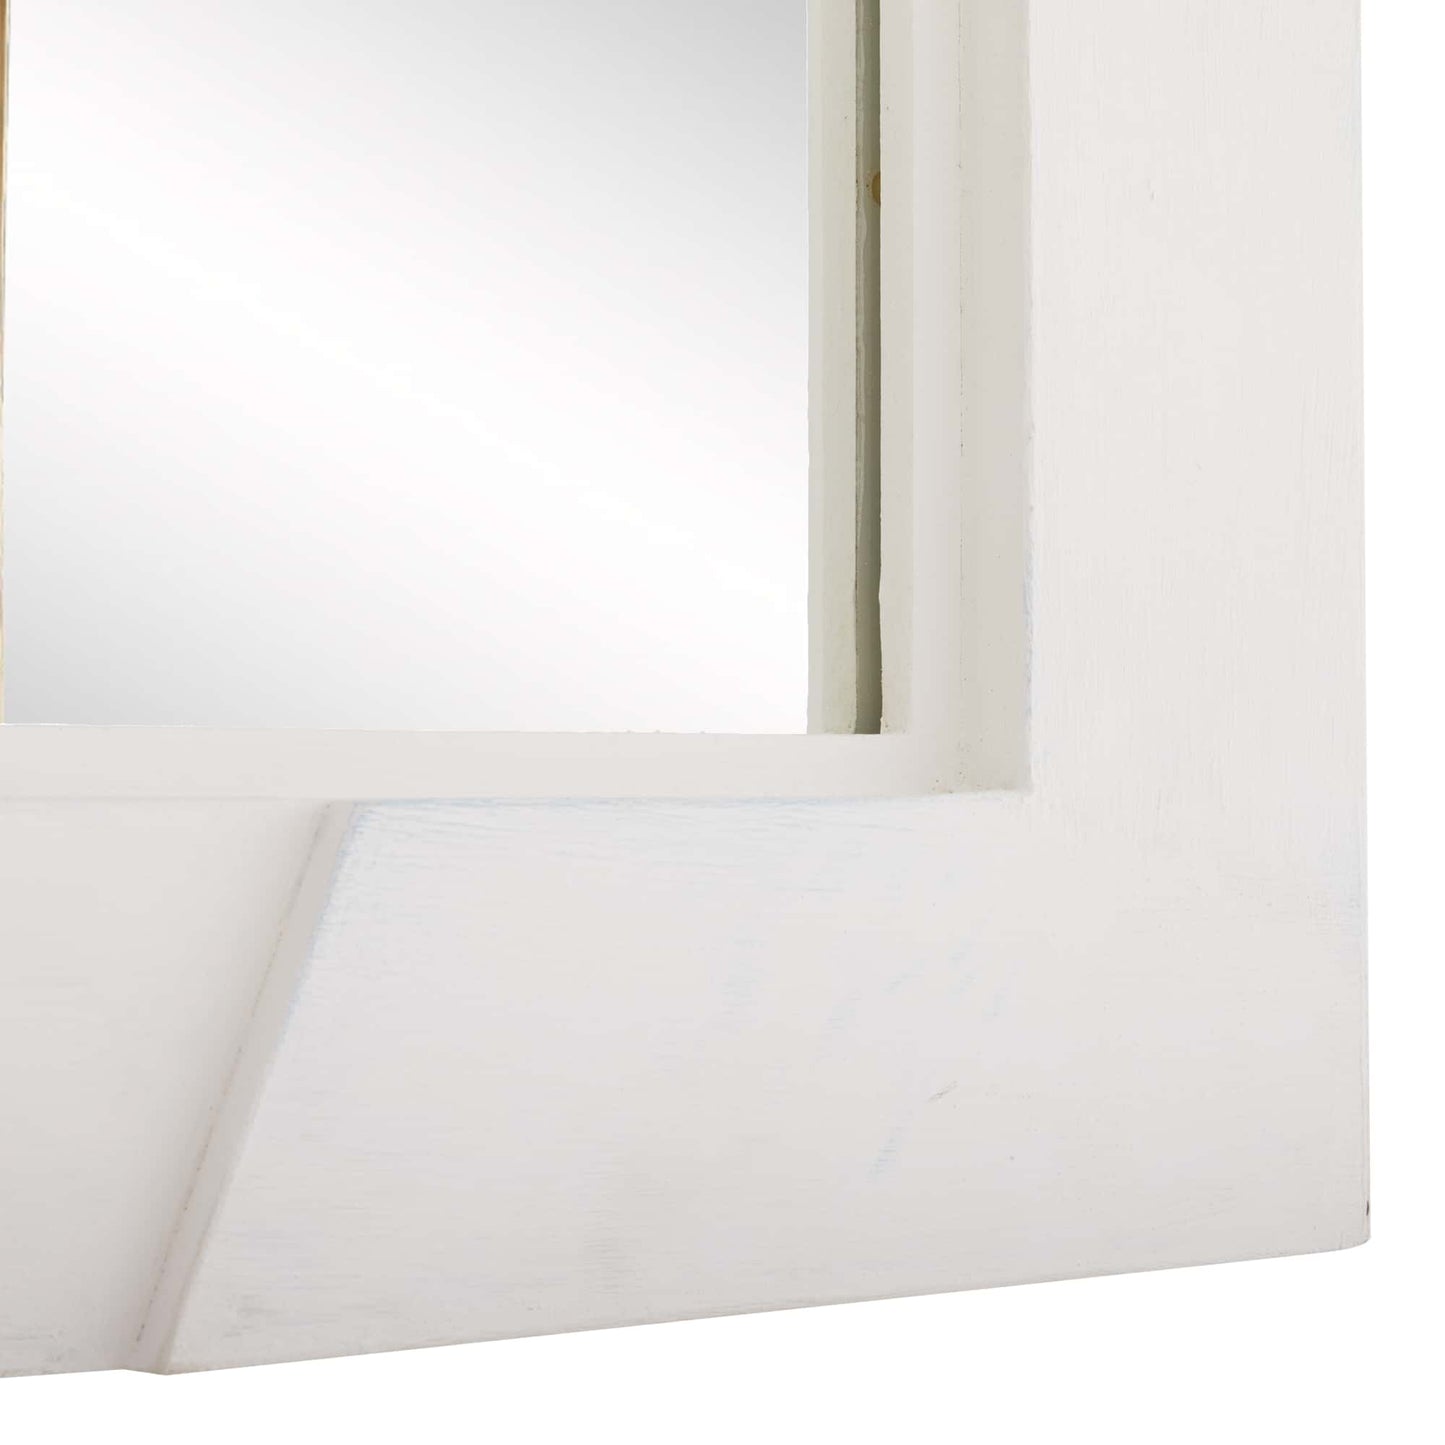 Expressive Safra Wall Mirror - White Gesso Finish, Cubist Sculpture Inspired Design